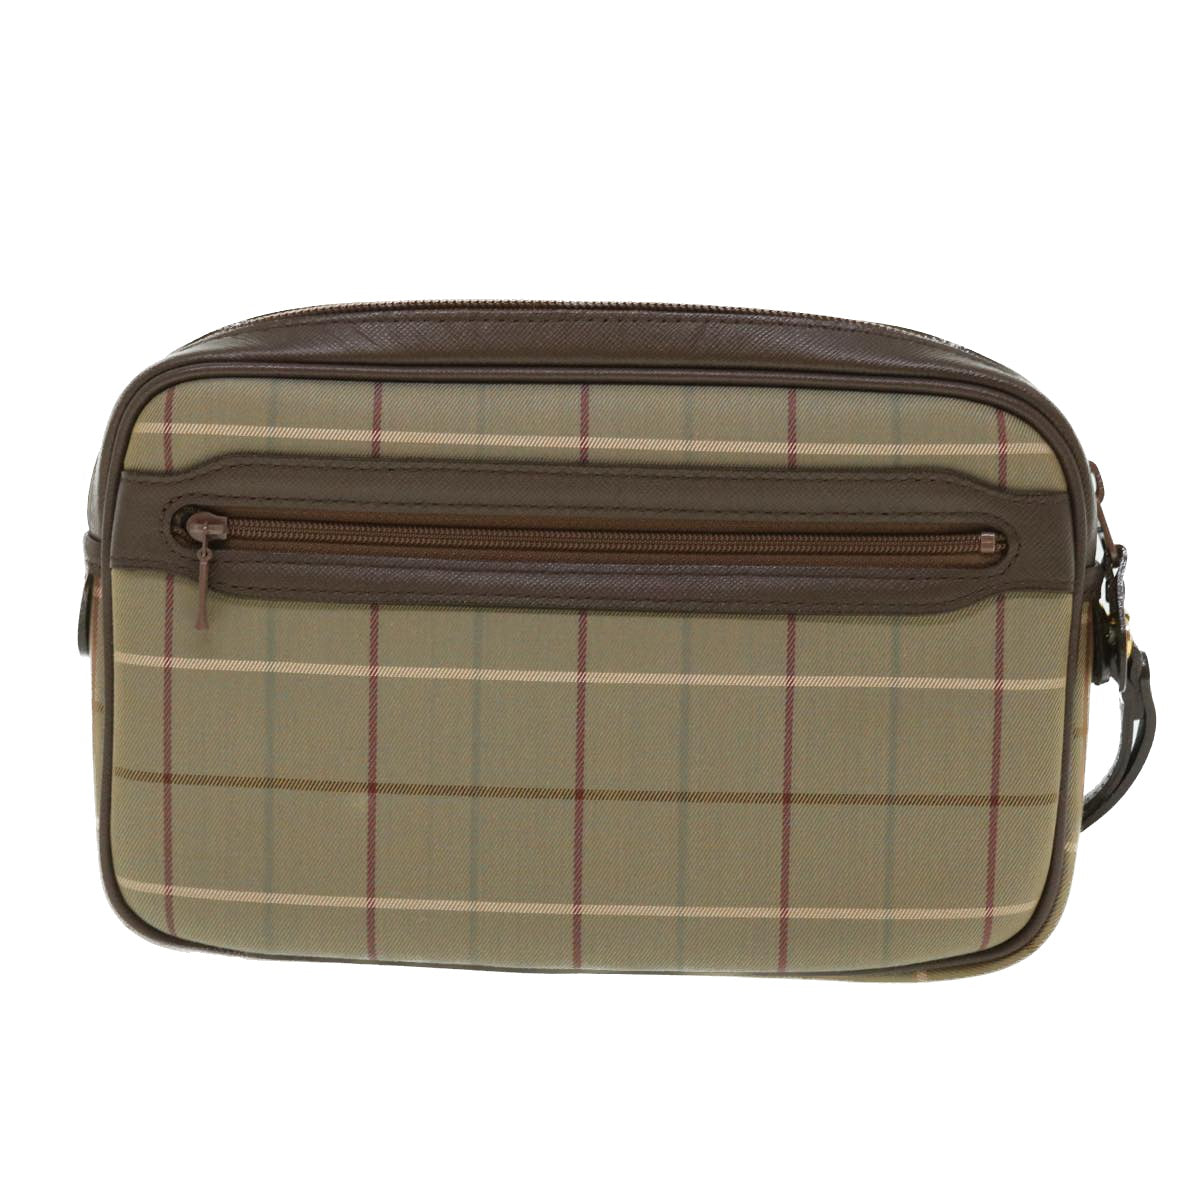 Burberrys Nova Check Clutch Bag Canvas Leather Brown Auth bs7645 - 0